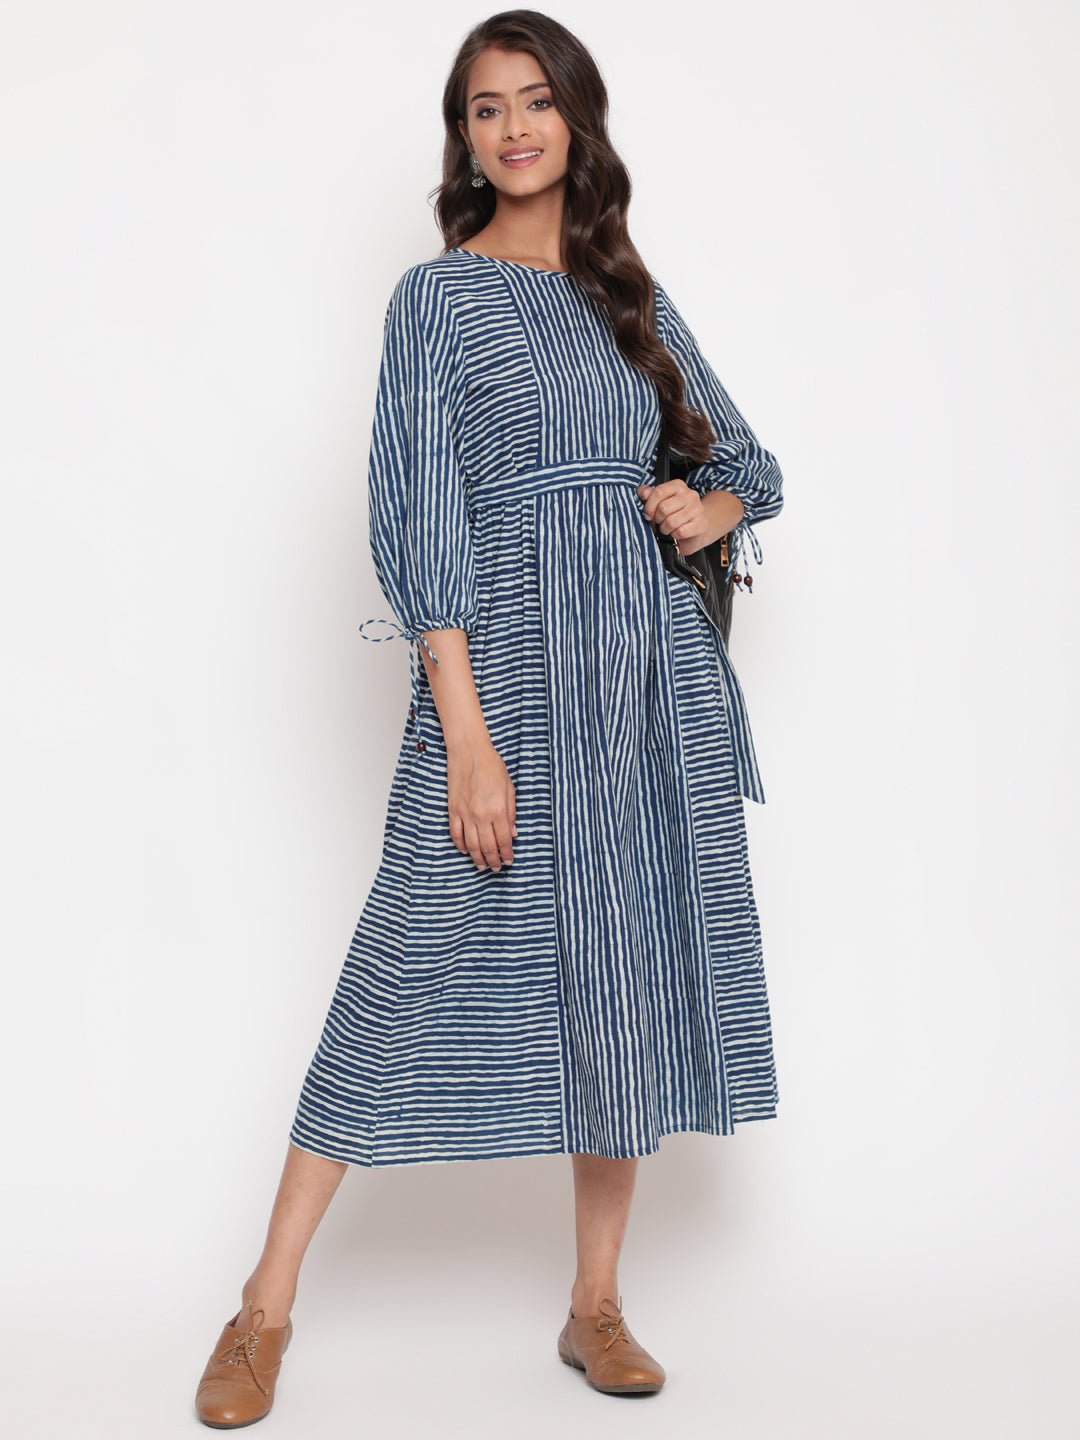 Woman posing in Savi's Cotton indigo Printed Striped Tie up designer Dress